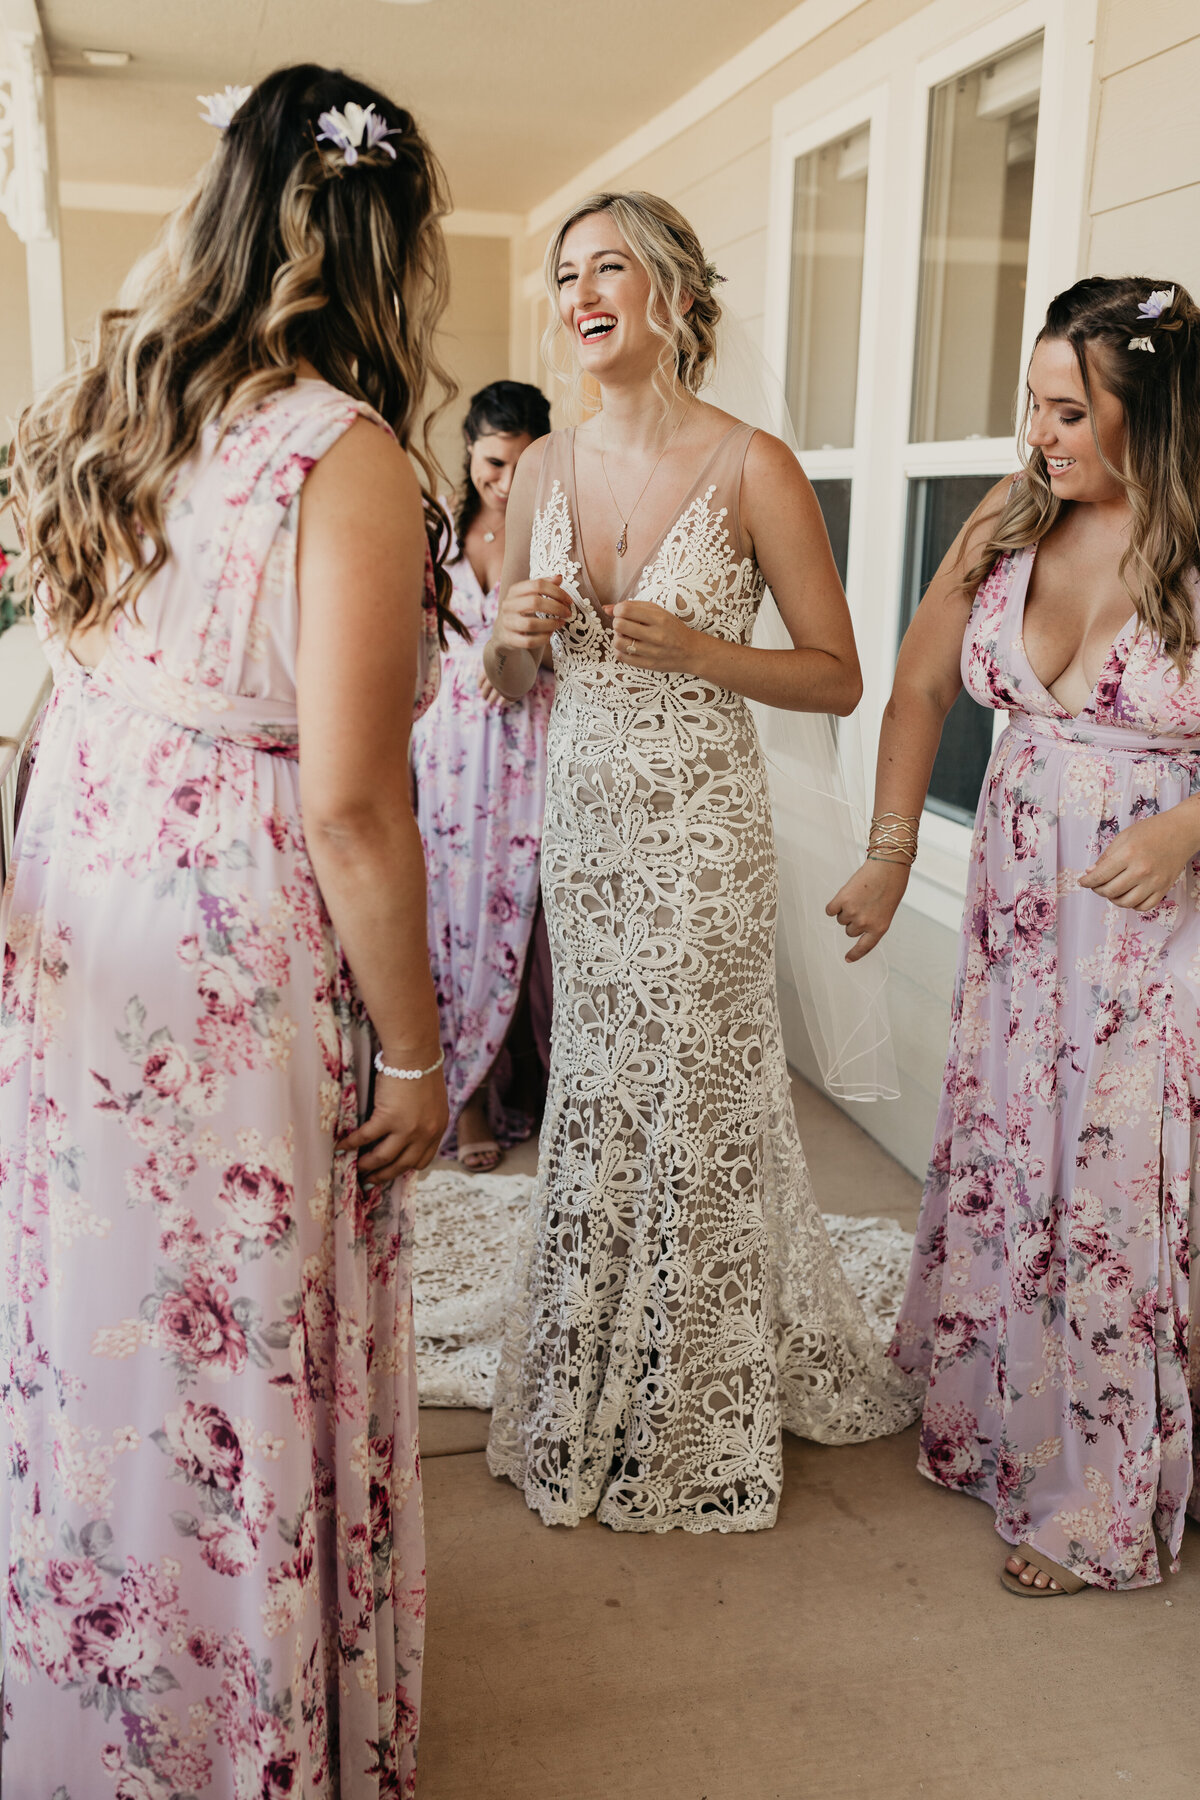 Maralyn-Estate-Garden-Atascadero-CA-wedding-bridesmaids-looking-at-brides-dress